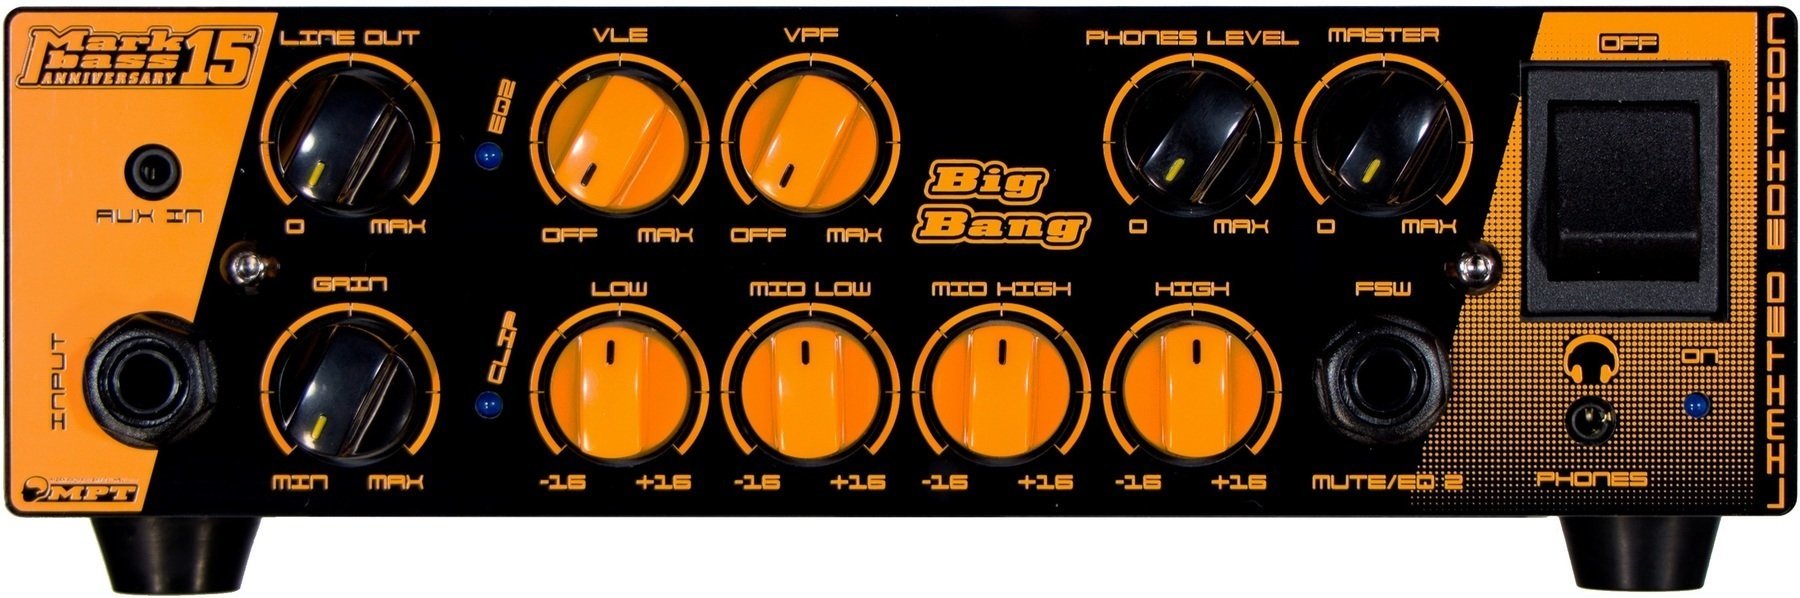 Solid-State Bass Amplifier Markbass Big Bang Anniversary 15